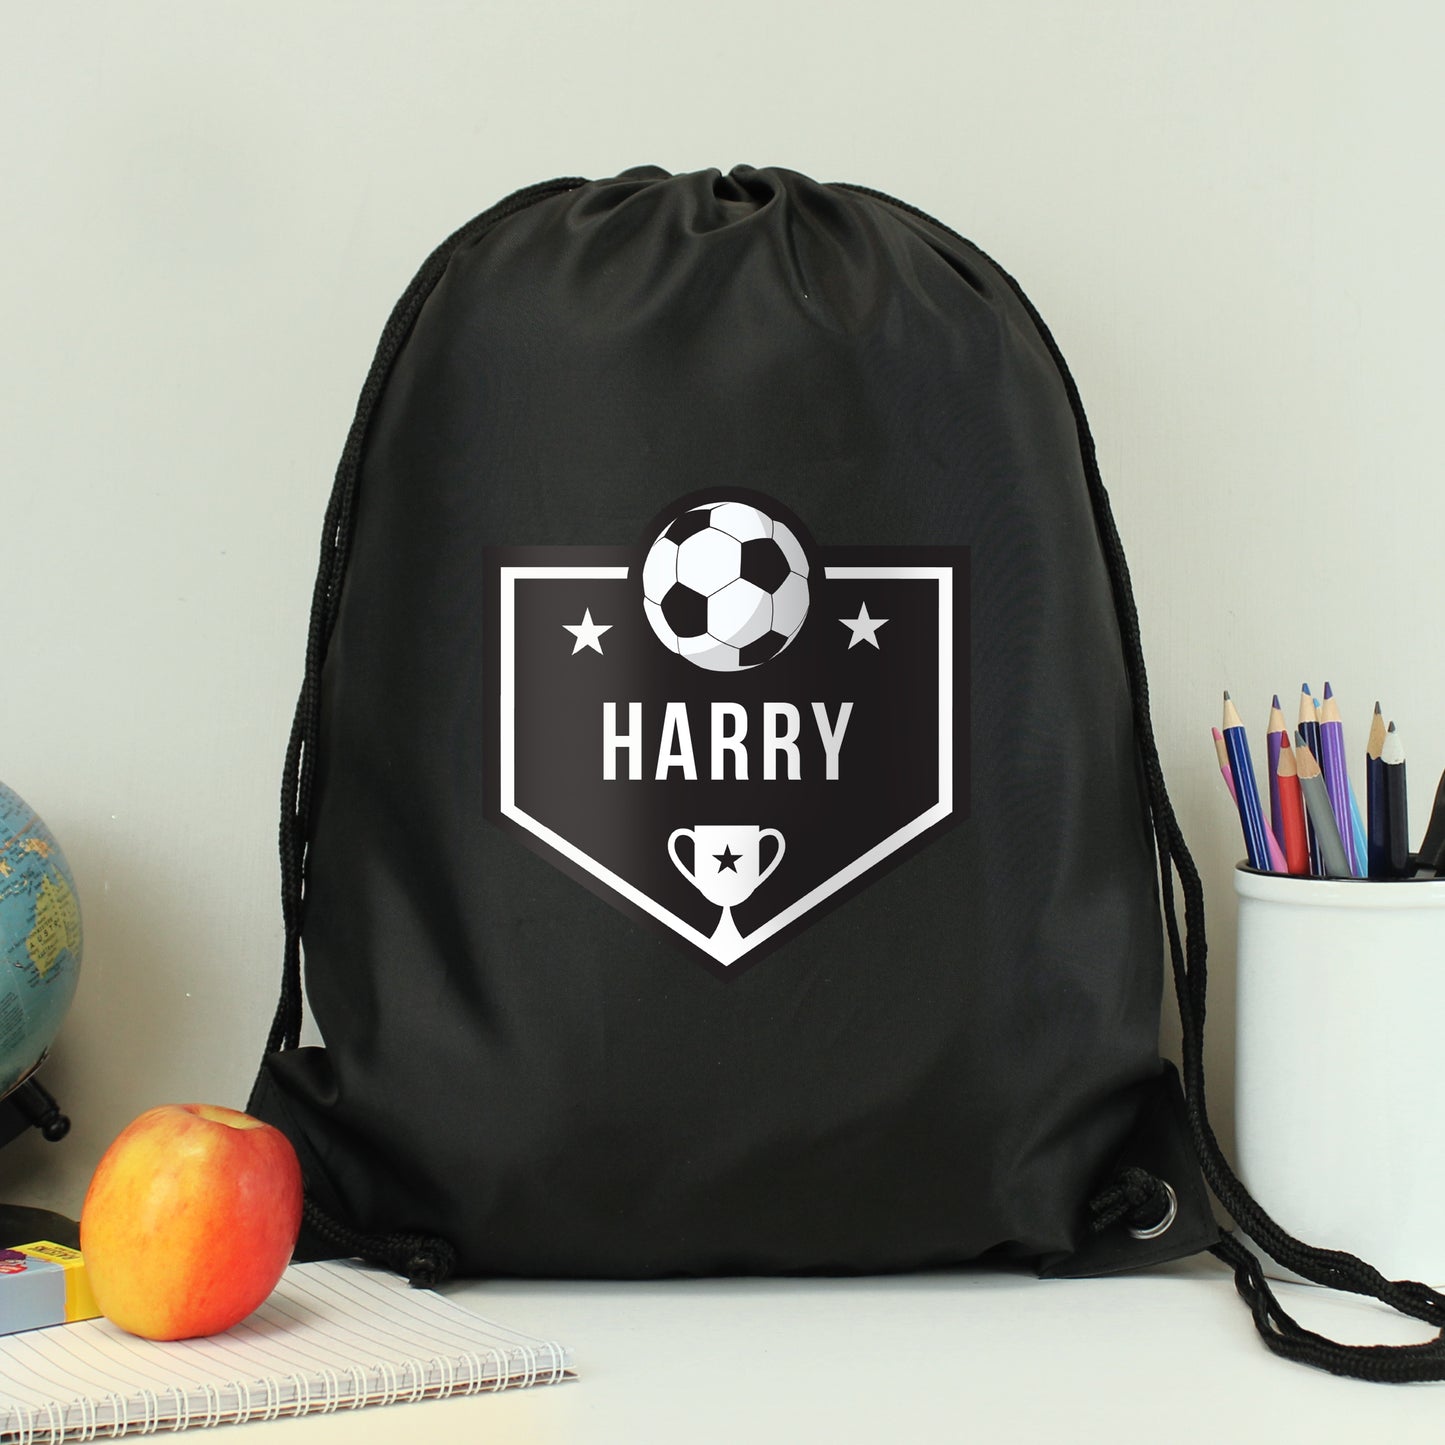 Personalised Football Swimming, Gym or Kit Bag - Black